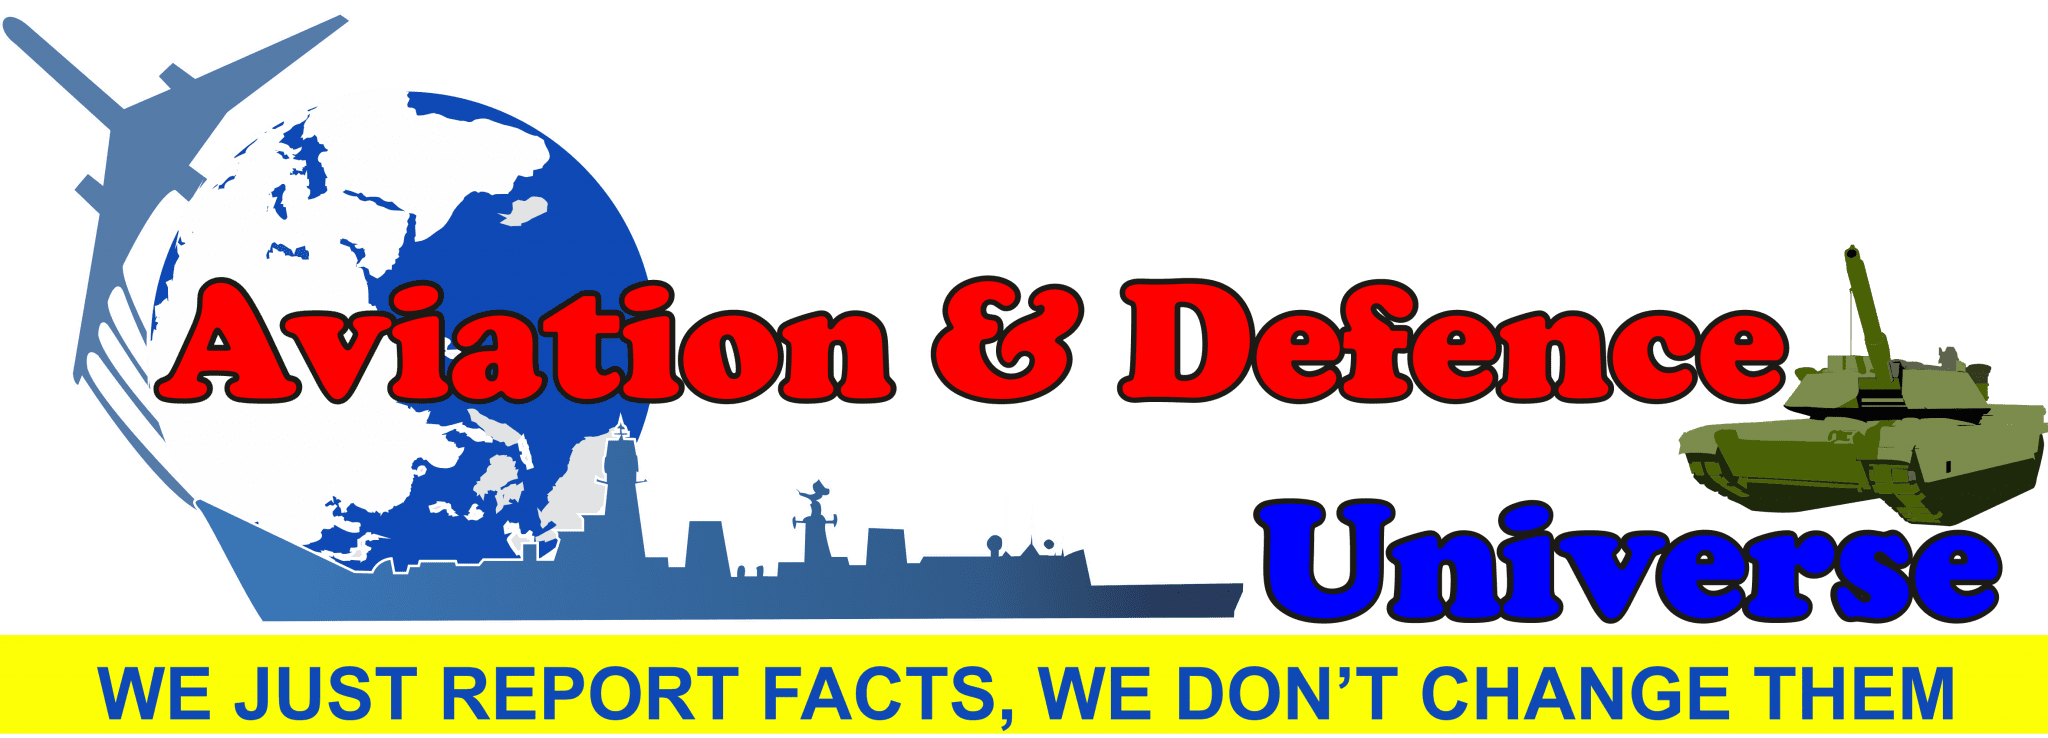 Aviation & Defence Universe